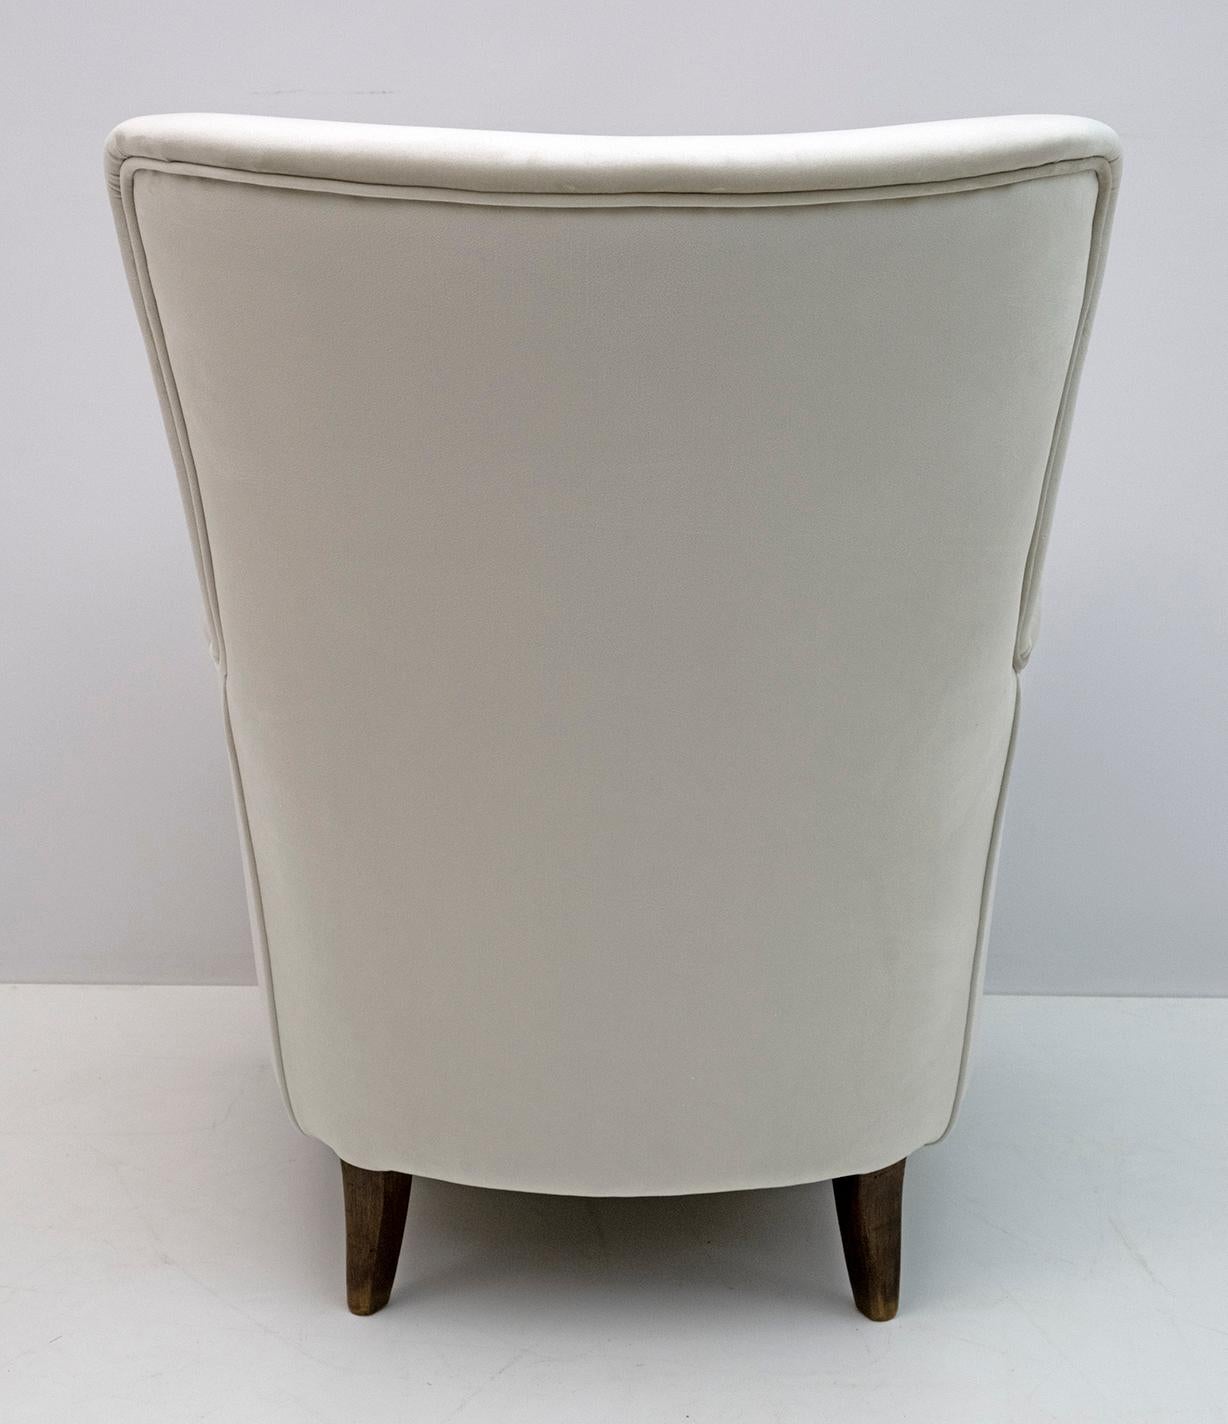 Attributed Gio Ponti Mid-Century Modern Italian Velvet Armchair for Isa, 1950s For Sale 1